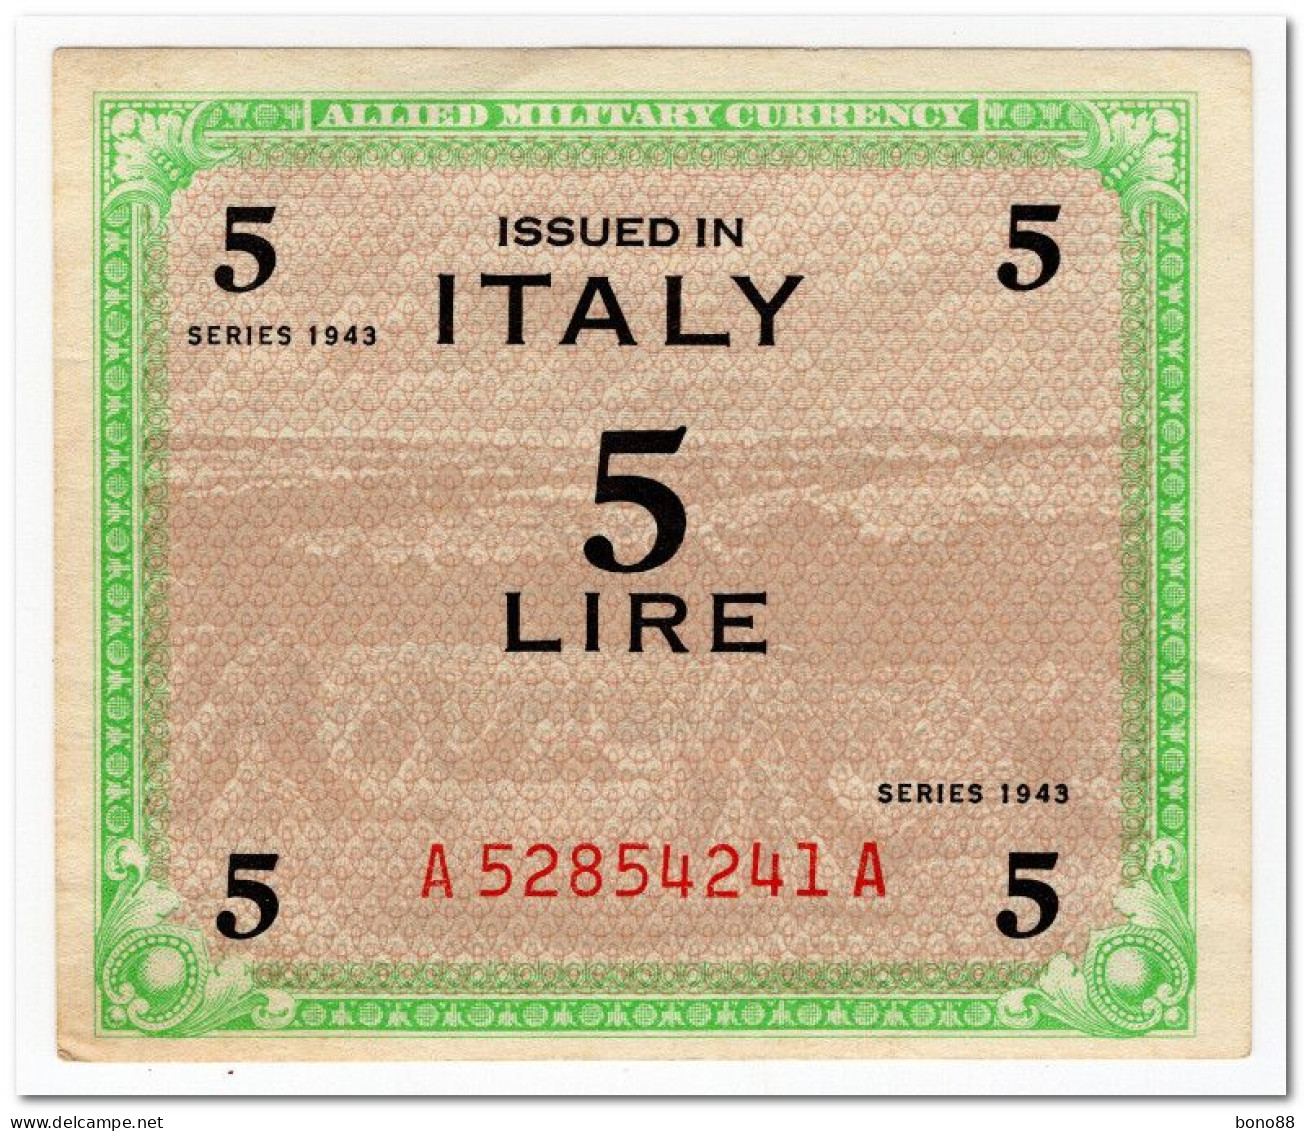 ITALY,ALLIED MILITARY CURRENCY,5 LIRE,1943,P.M12,XF+ - 2. WK - Alliierte Besatzung